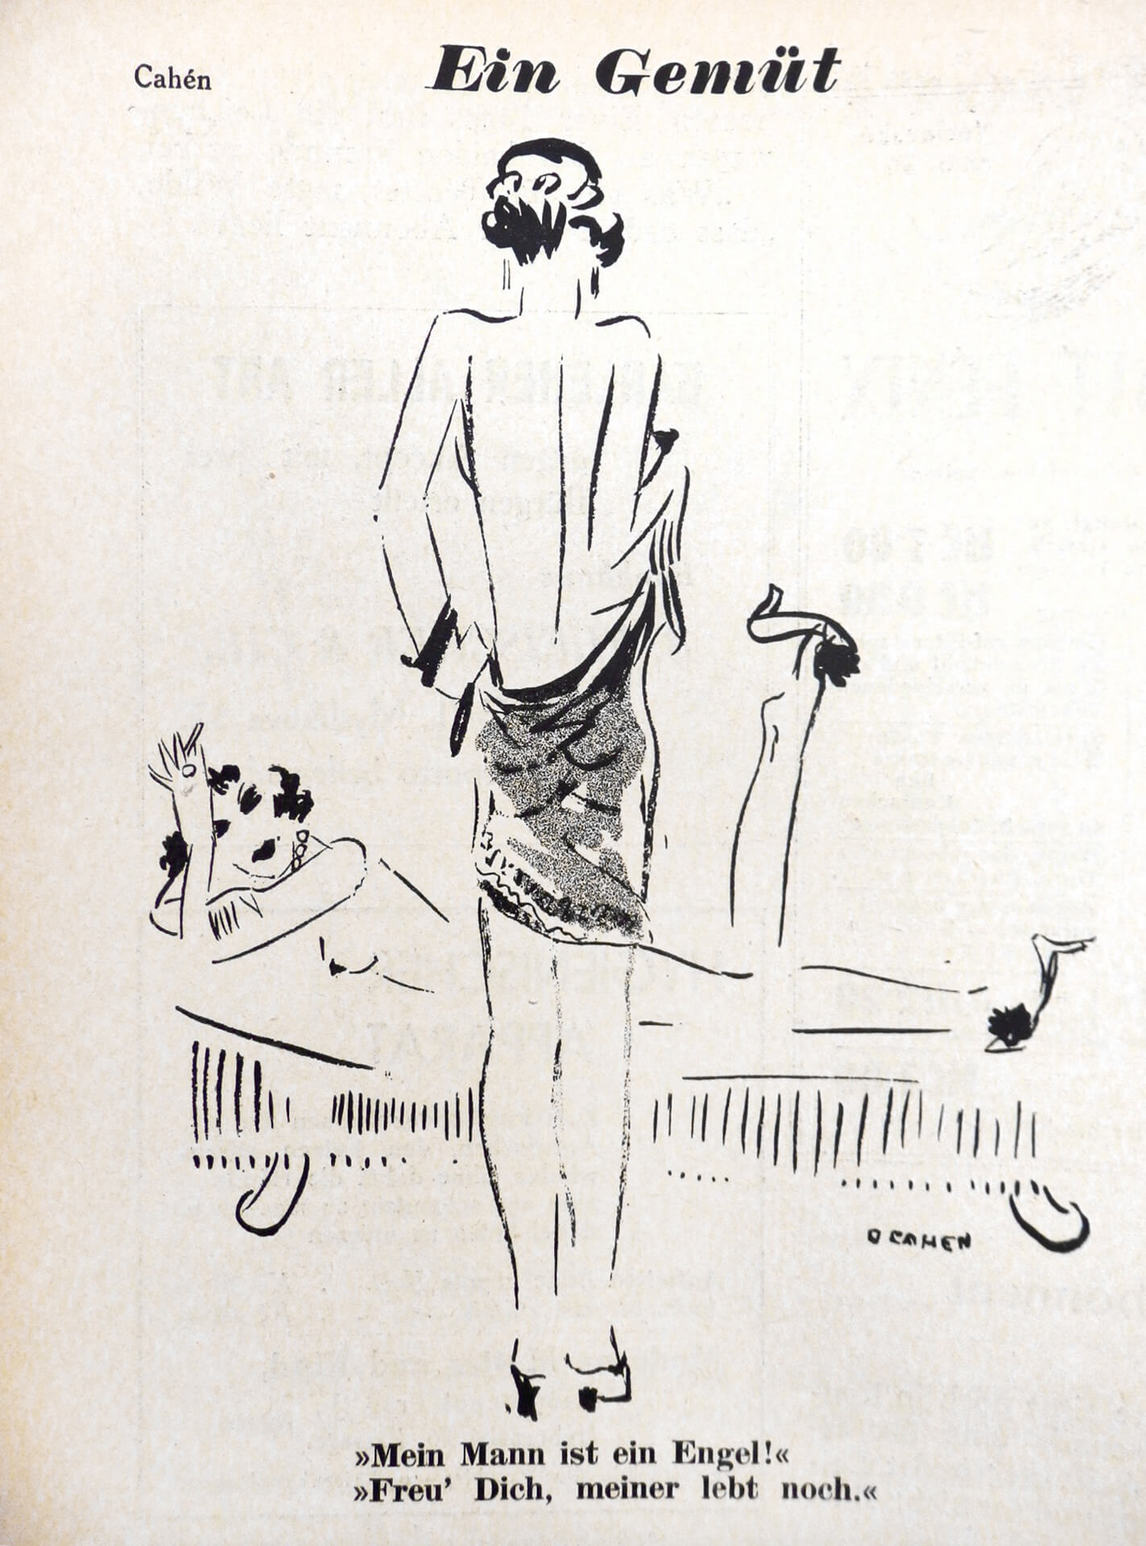 Art Canada Institute, Oscar Cahen, Ein Gemüt Cartoon, 1934